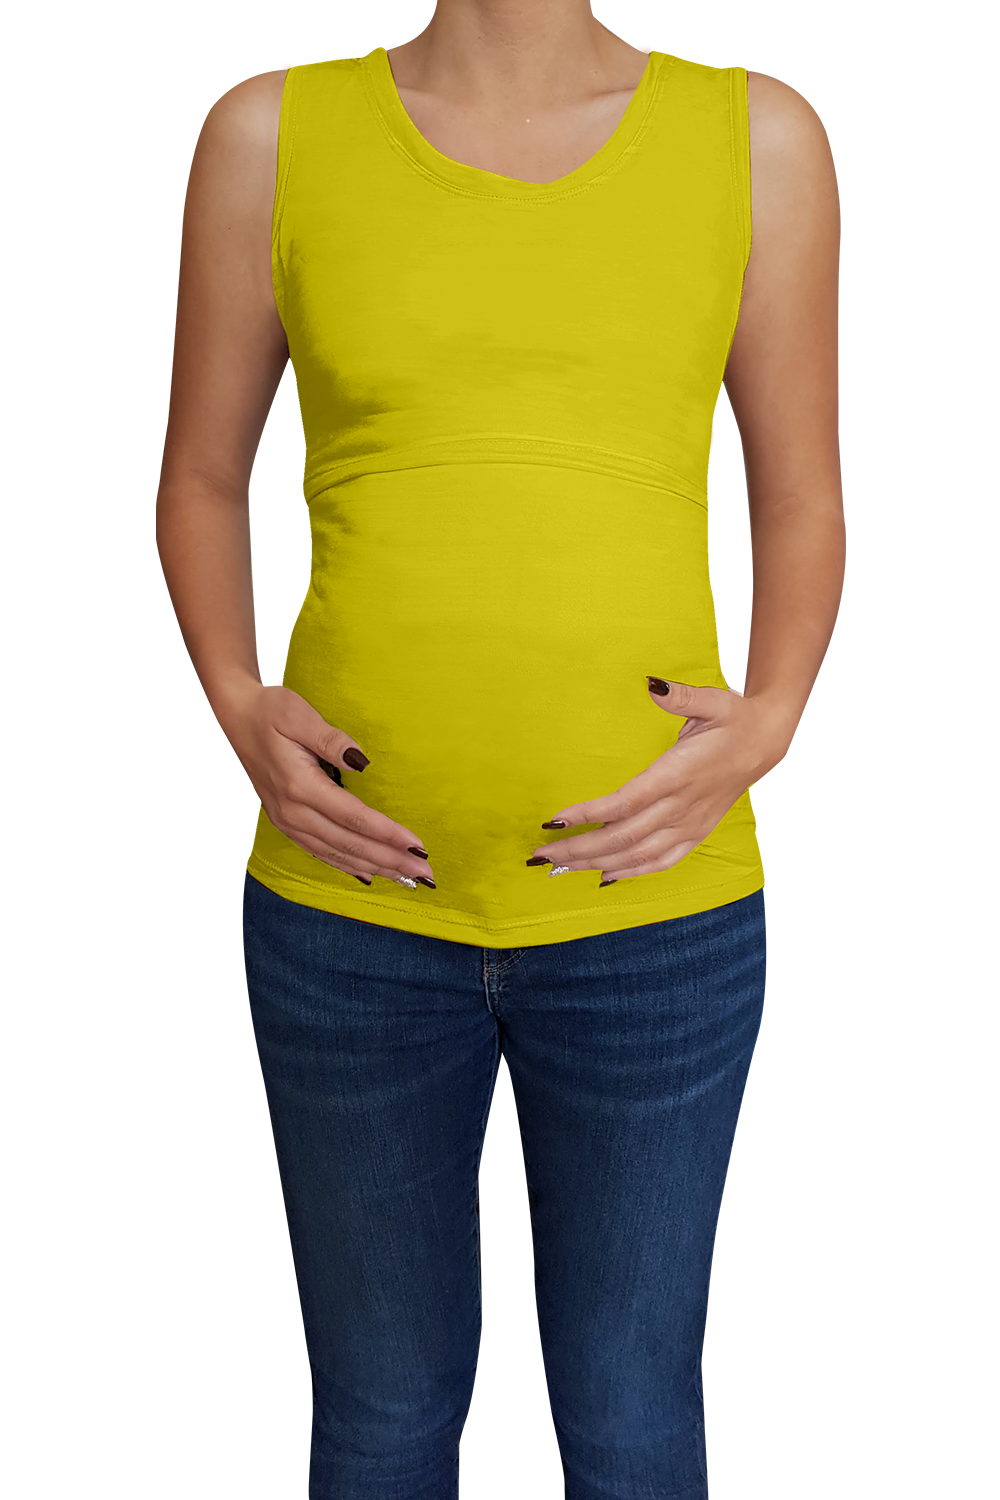 Blusa maternidad-lactancia. Tirante ancho Amarillo